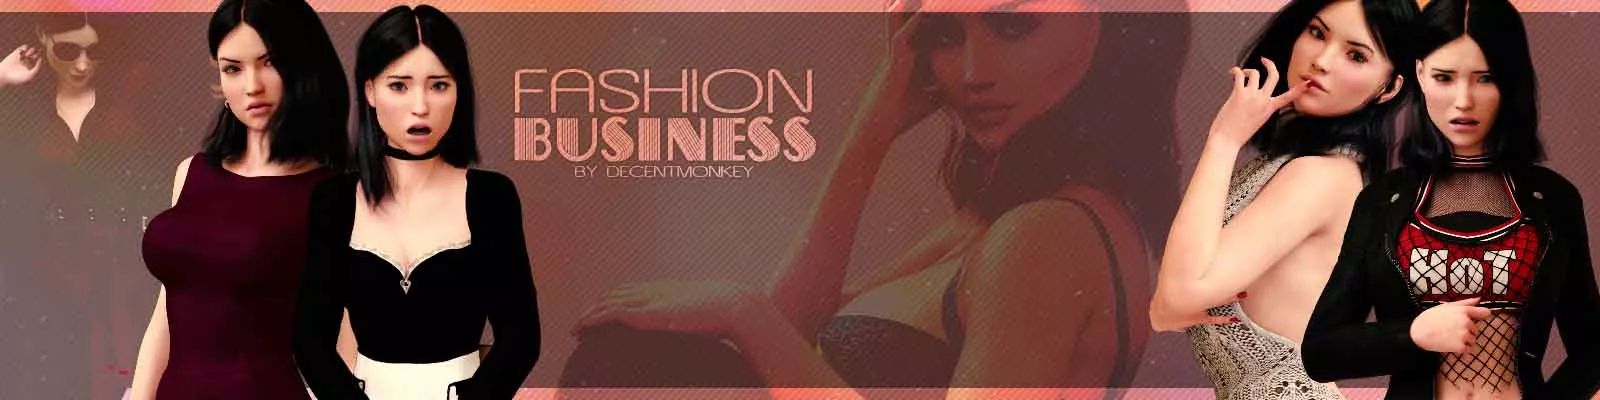 Fashion Business 3d sexspel, porrspel, vuxenspel